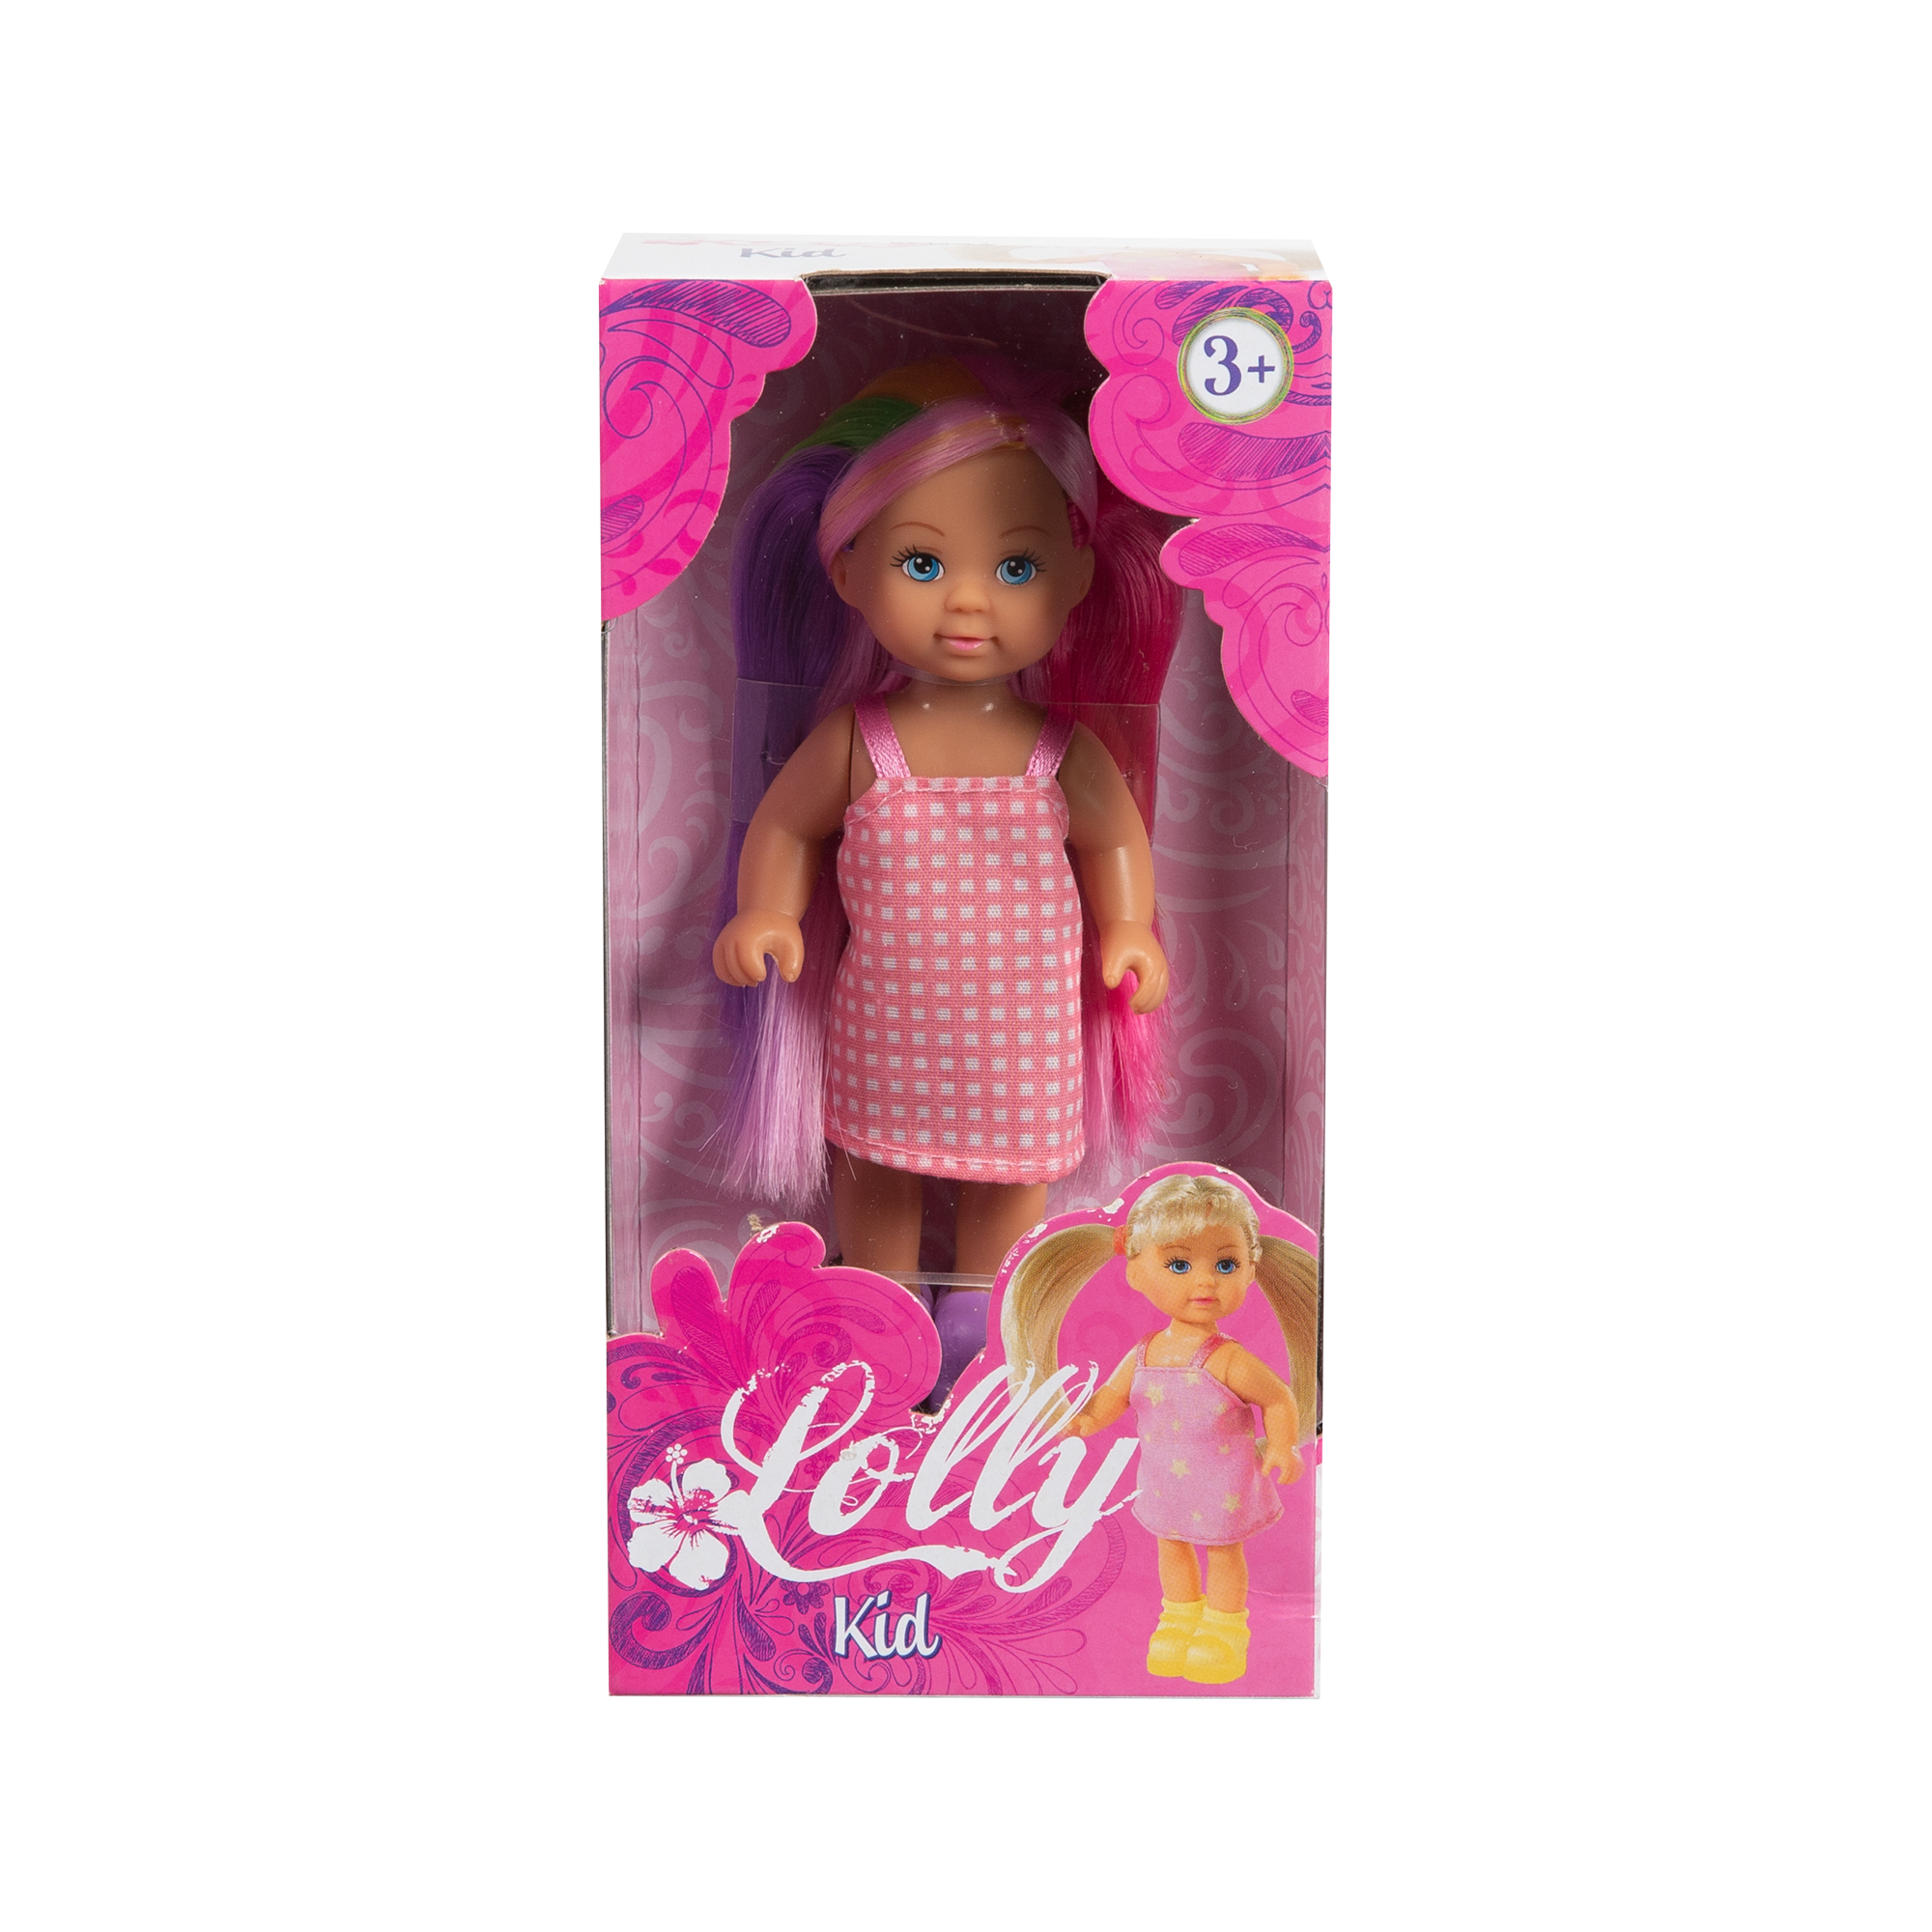 Lolly kid - LOLLY